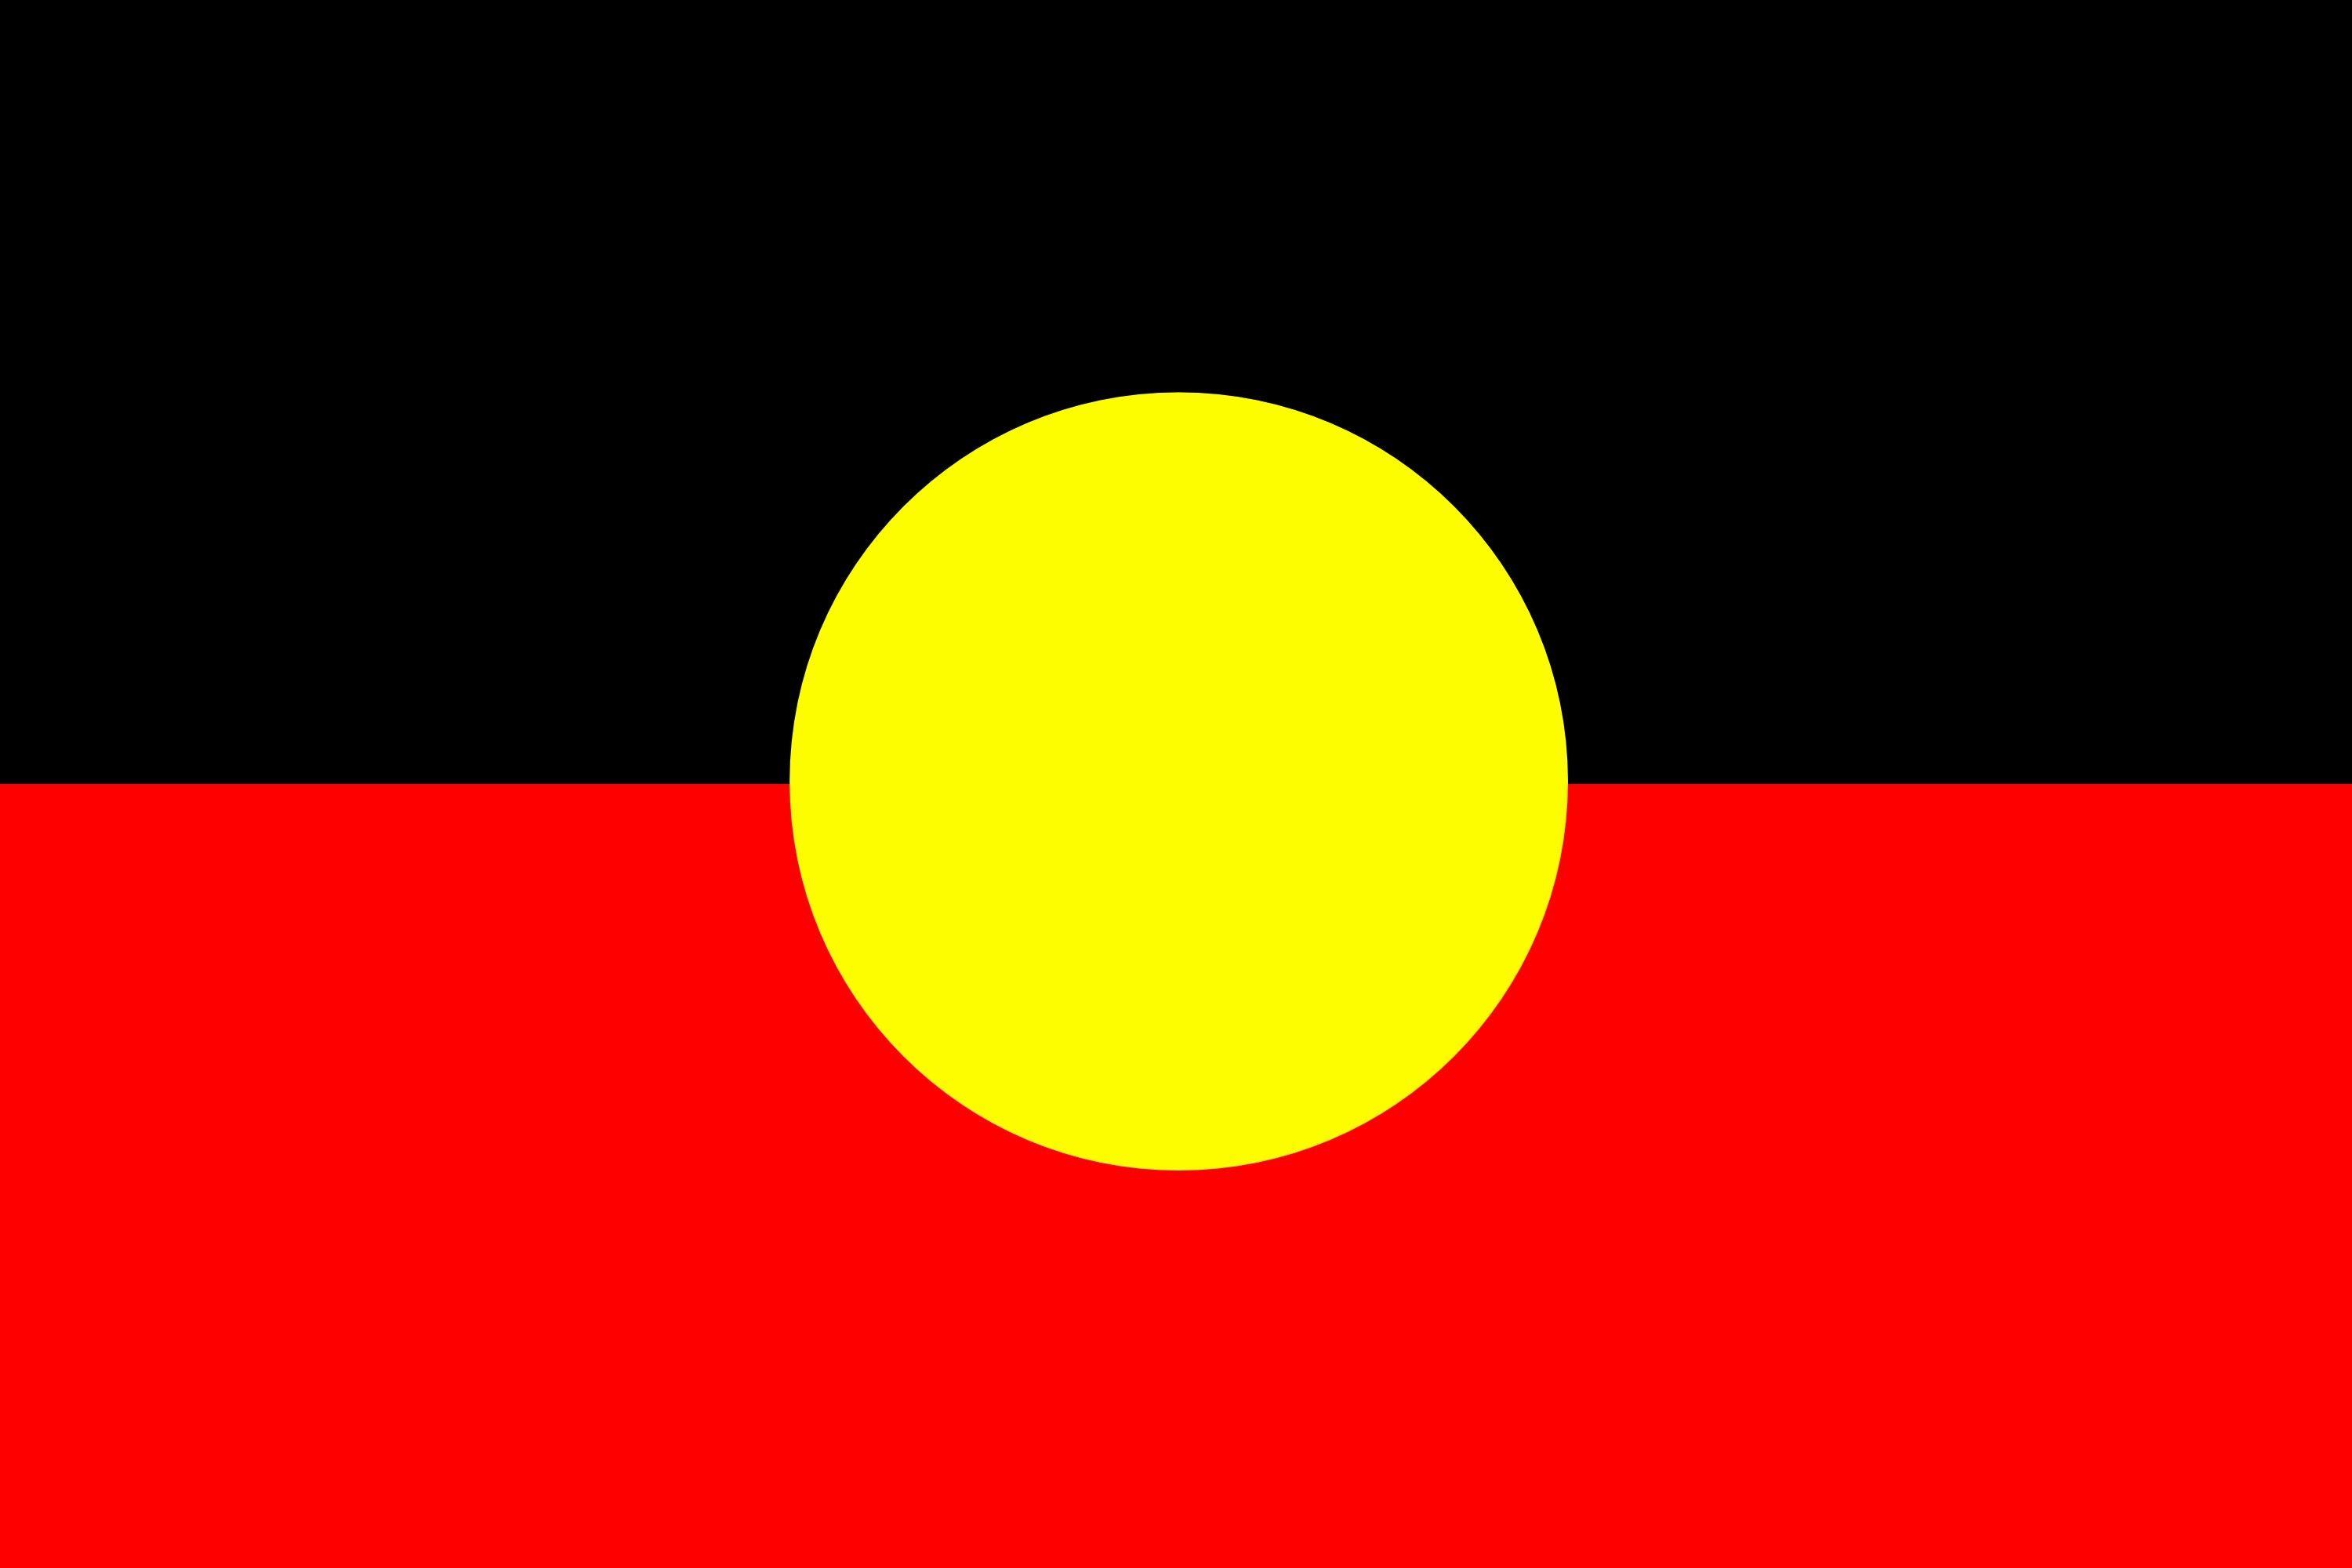 Australian aboriginal flag wallpaper. PC